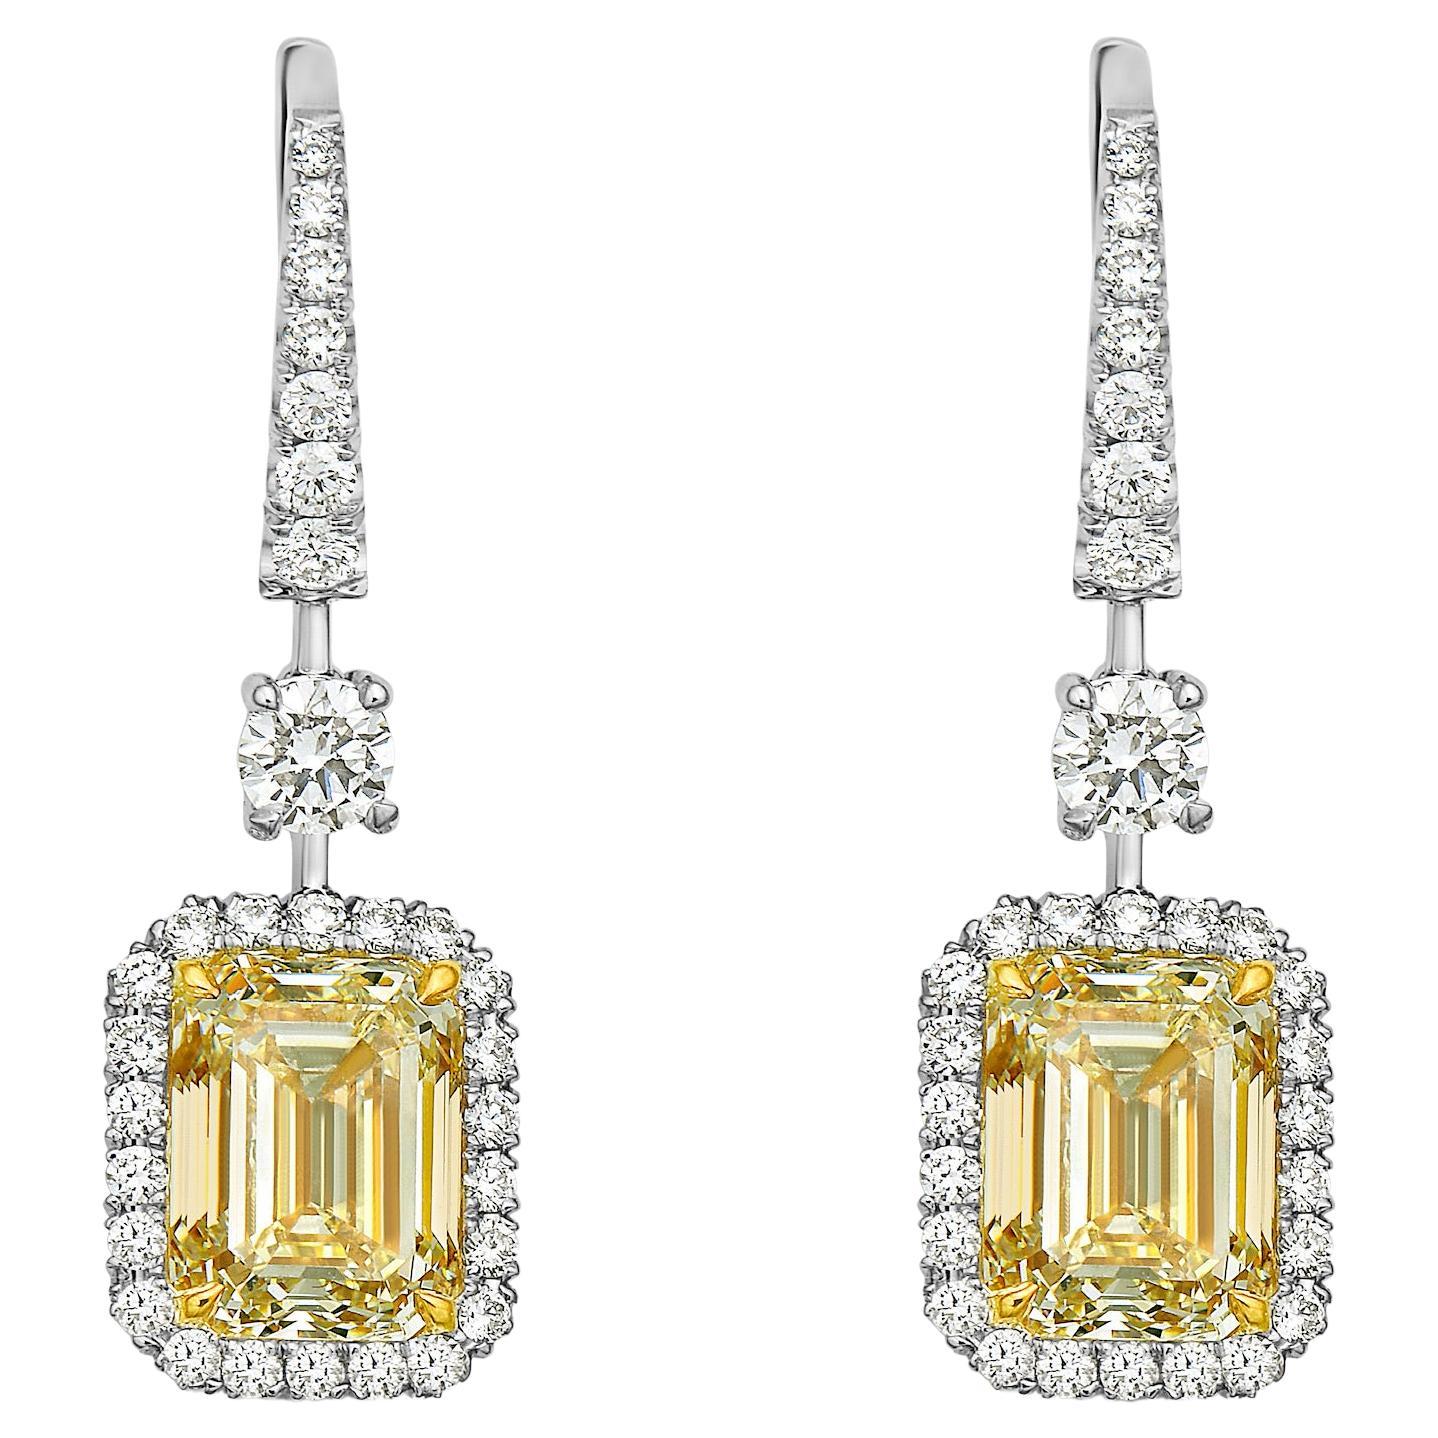 6 Carat GIA Light Yellow Emerald Cut Diamond Earrings